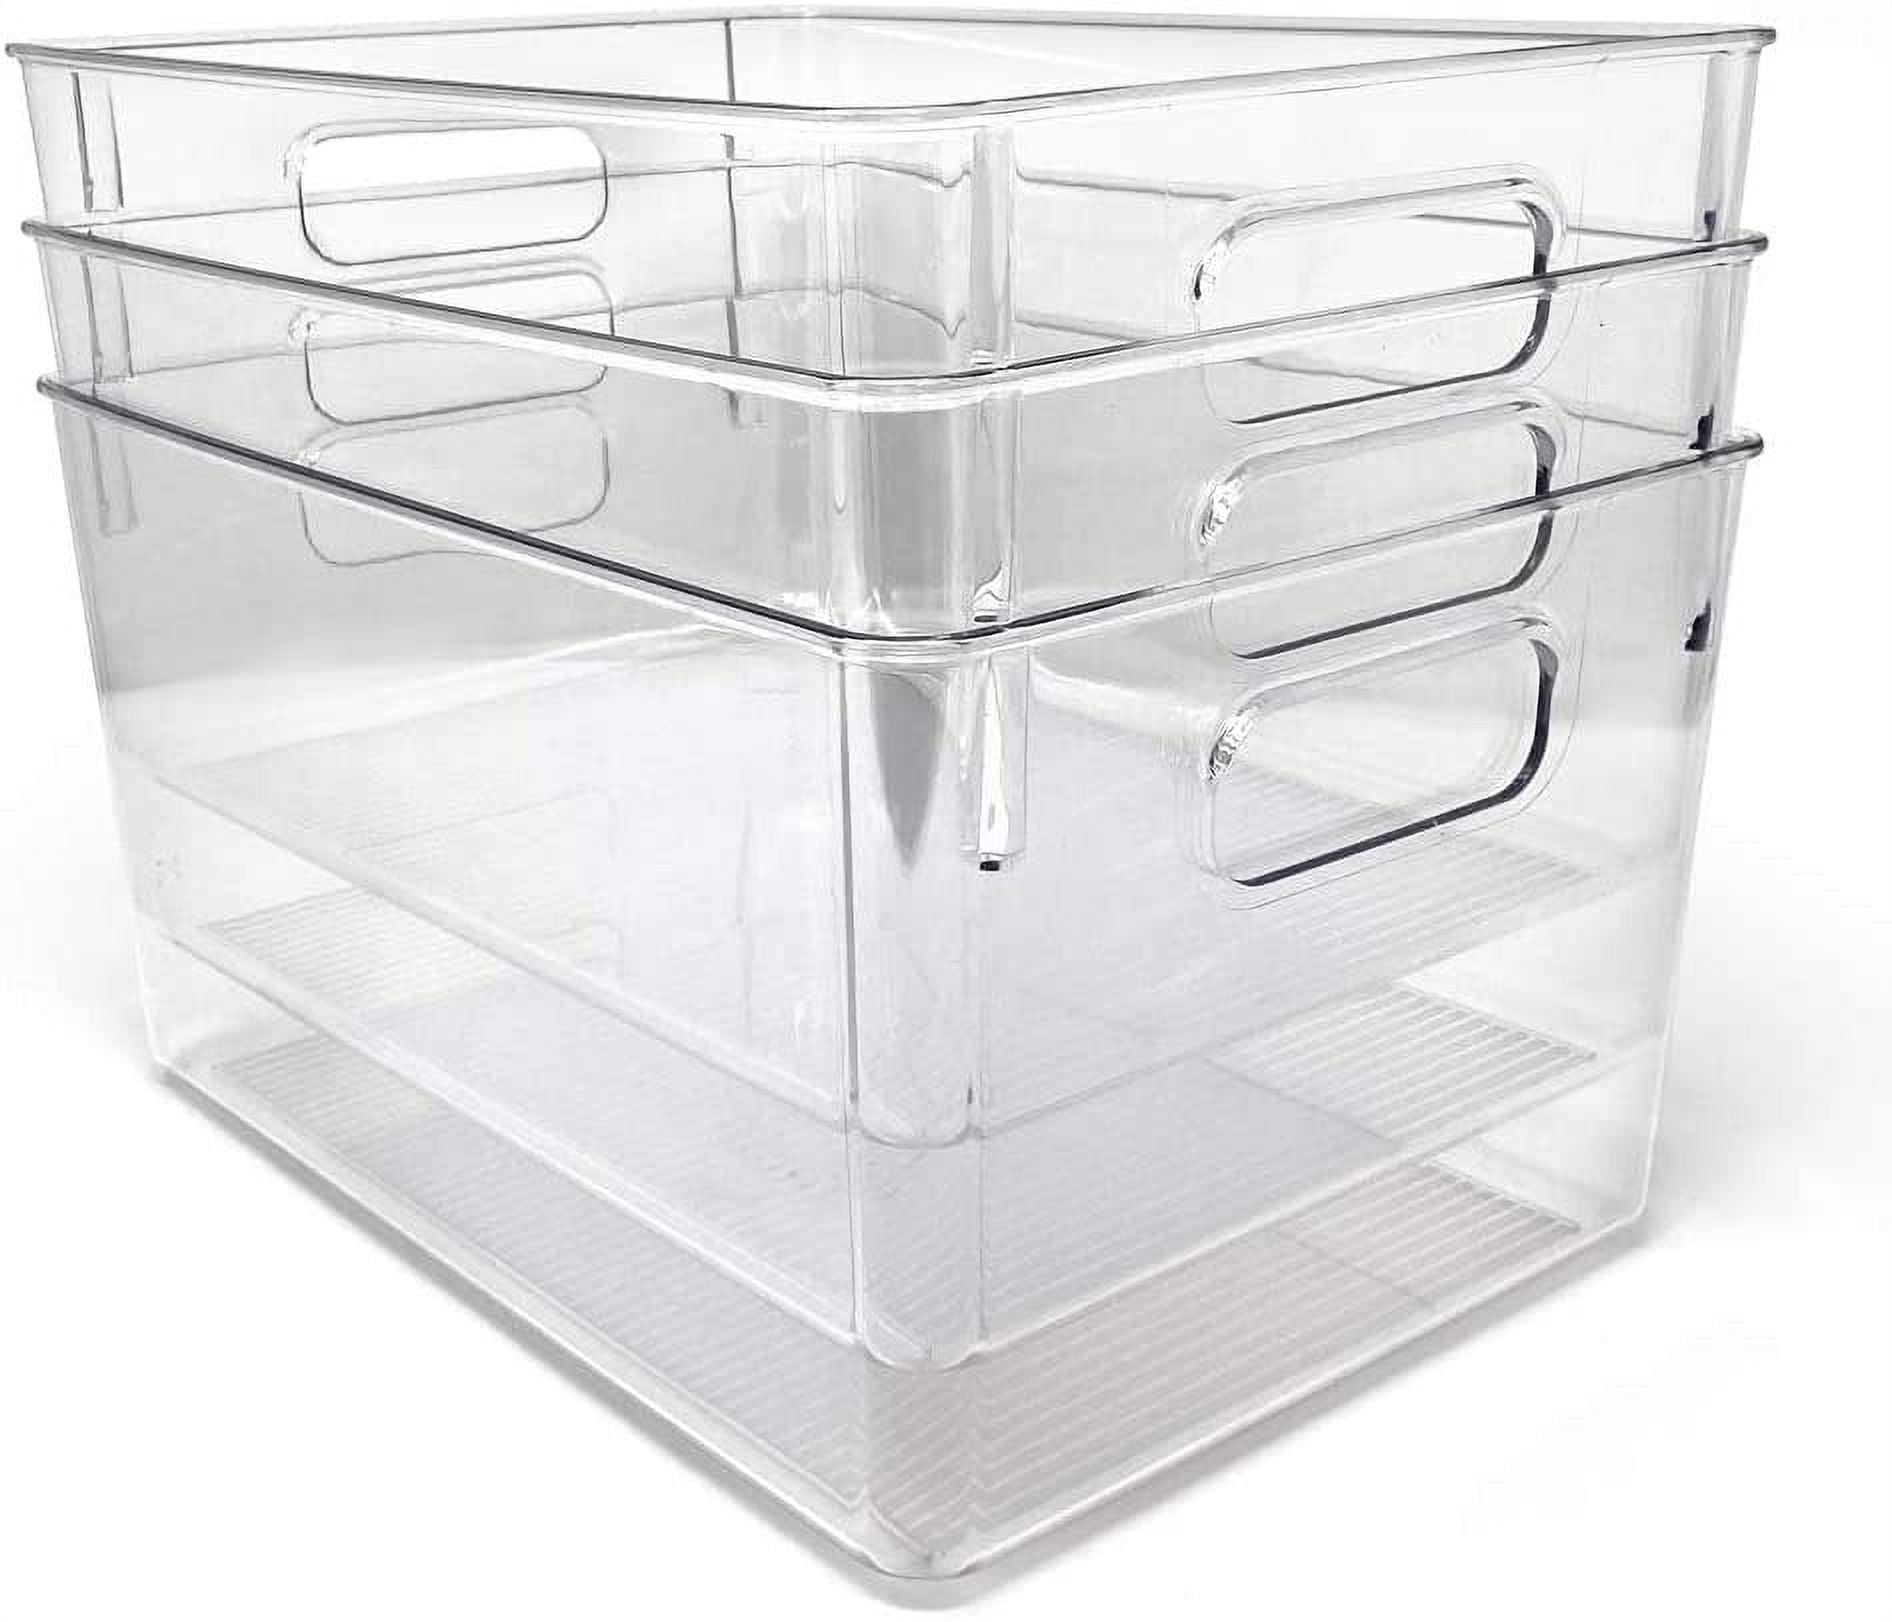 Isaac Jacobs 5-Pack Small Clear Storage Bins (5.5” L x 7.75” W x 2.5” H), Plastic Organizer for Home, Office, Kitchen, fridge/freezer, Desk